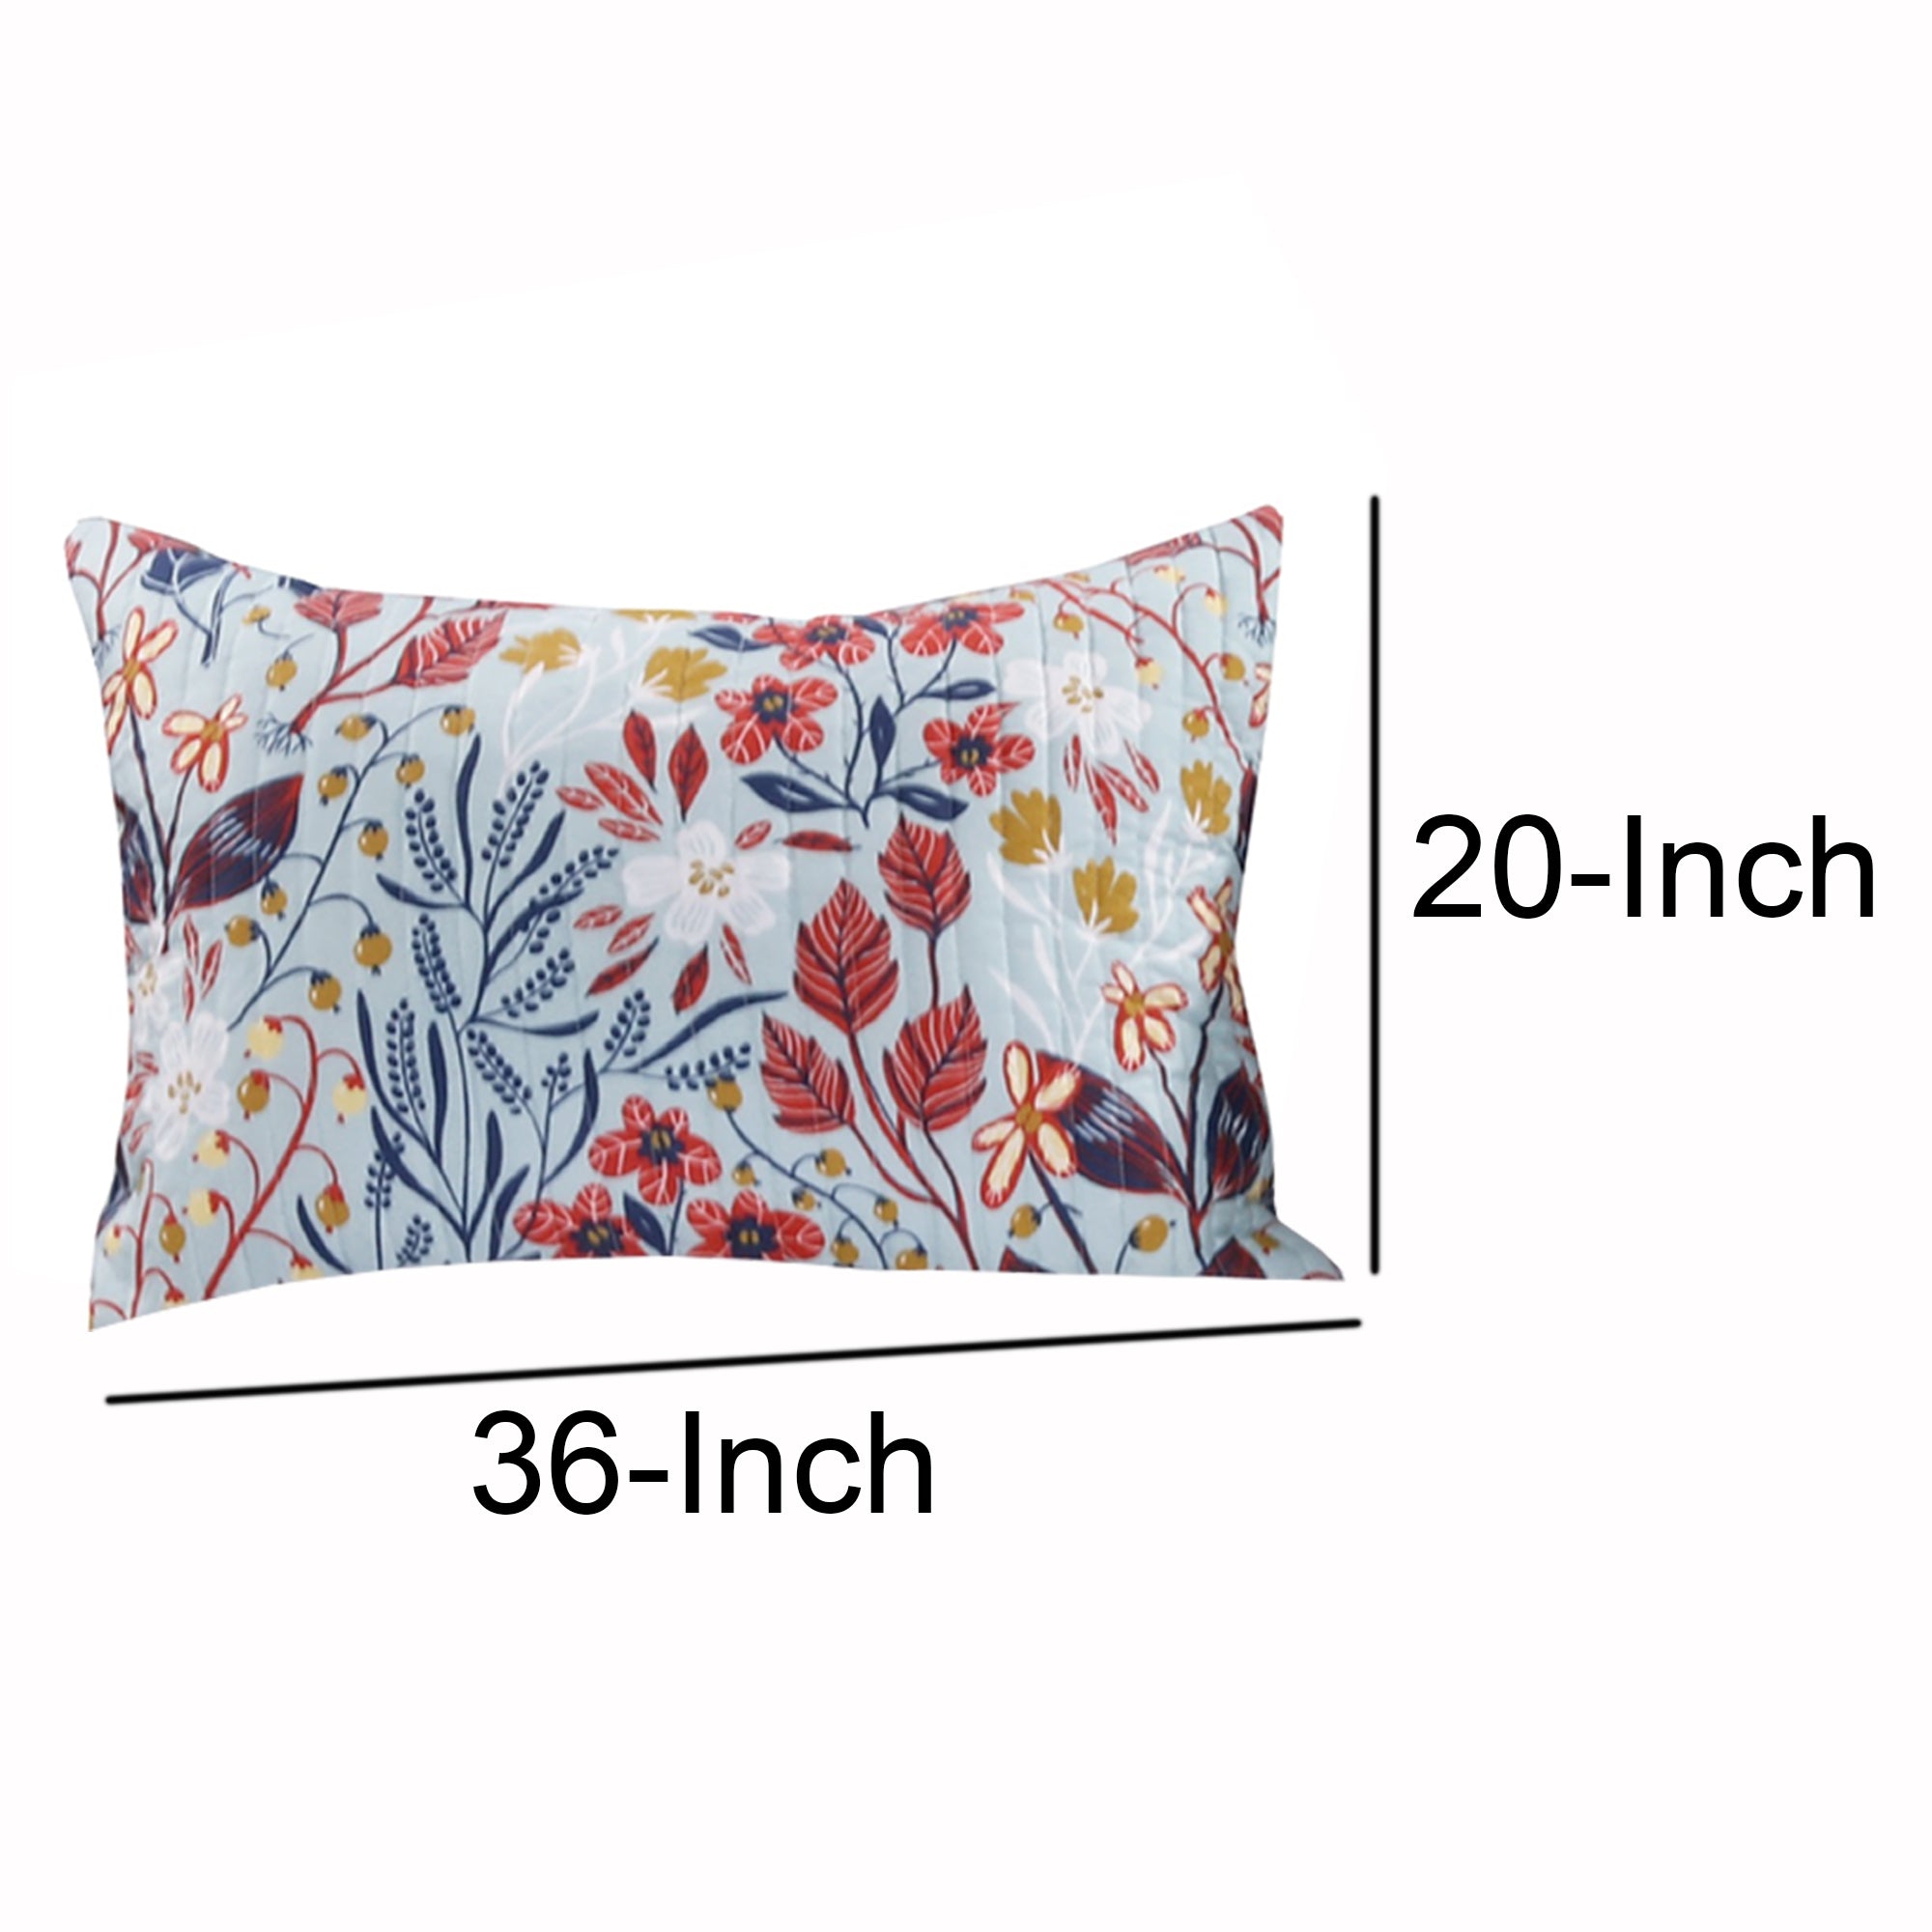 20 X 36 Ultra Soft King Pillow Sham, Floral Print